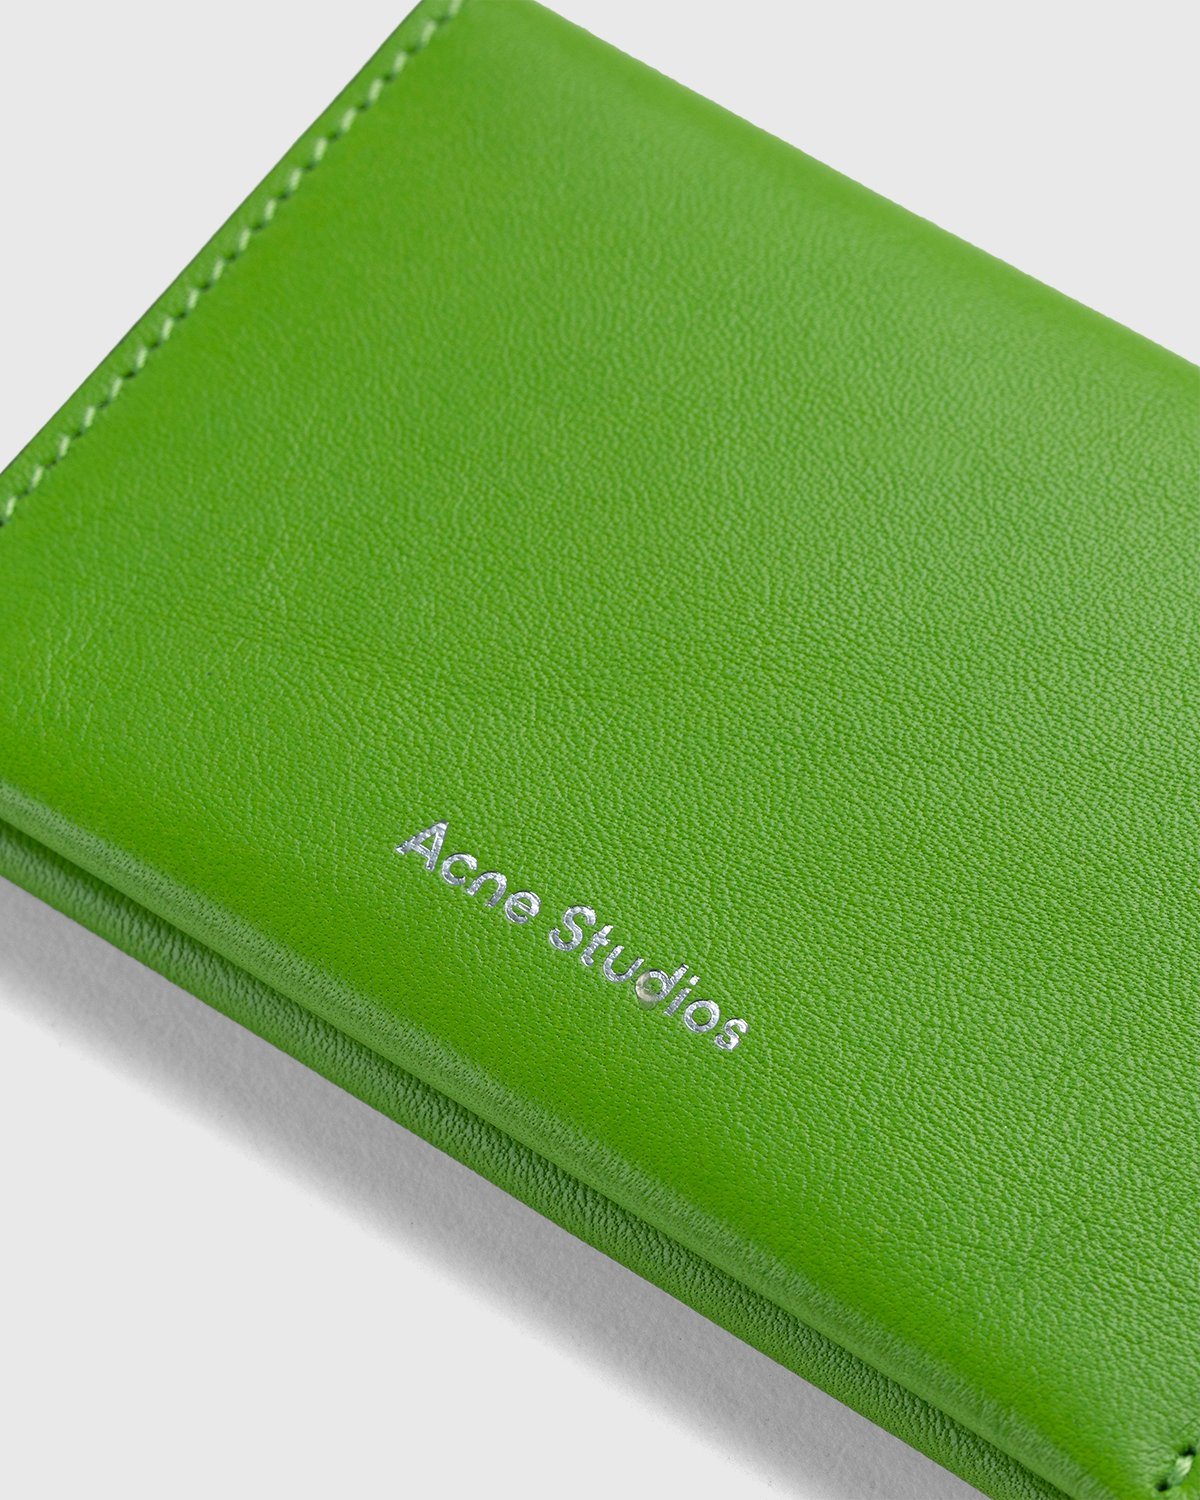 Acne Studios - Leather Card Case Multi Green - Accessories - Green - Image 3